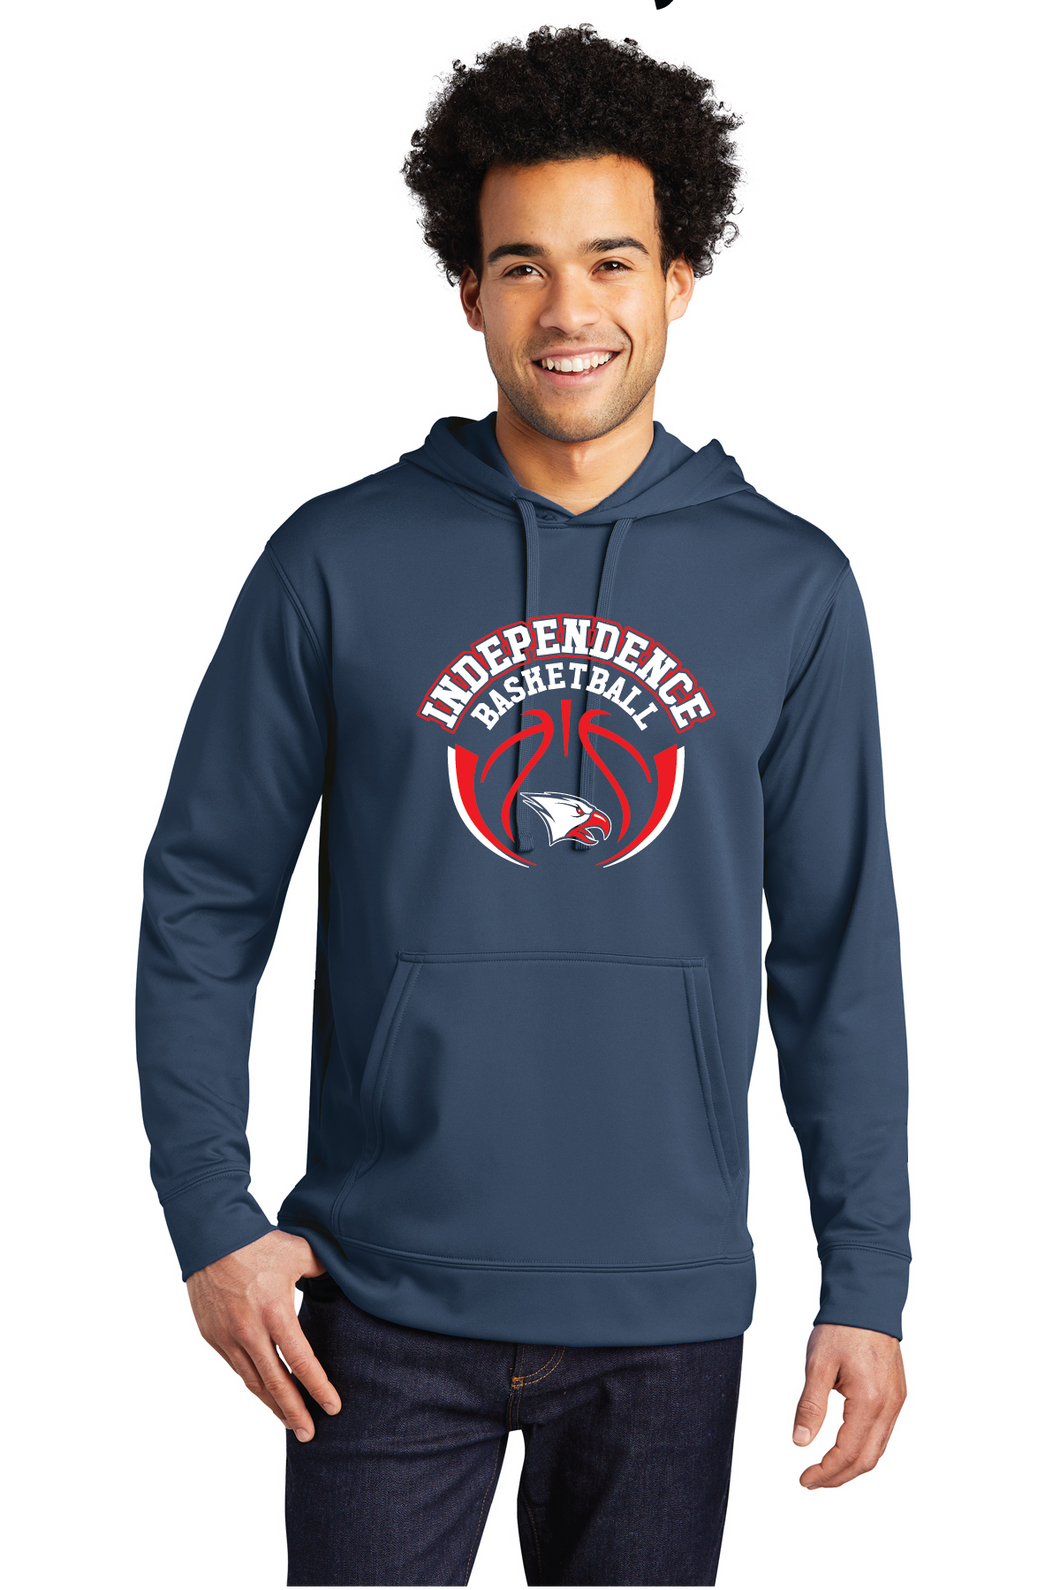 Performance Fleece Pullover Hooded Sweatshirt / Navy  / Independence Middle School Boys Basketball